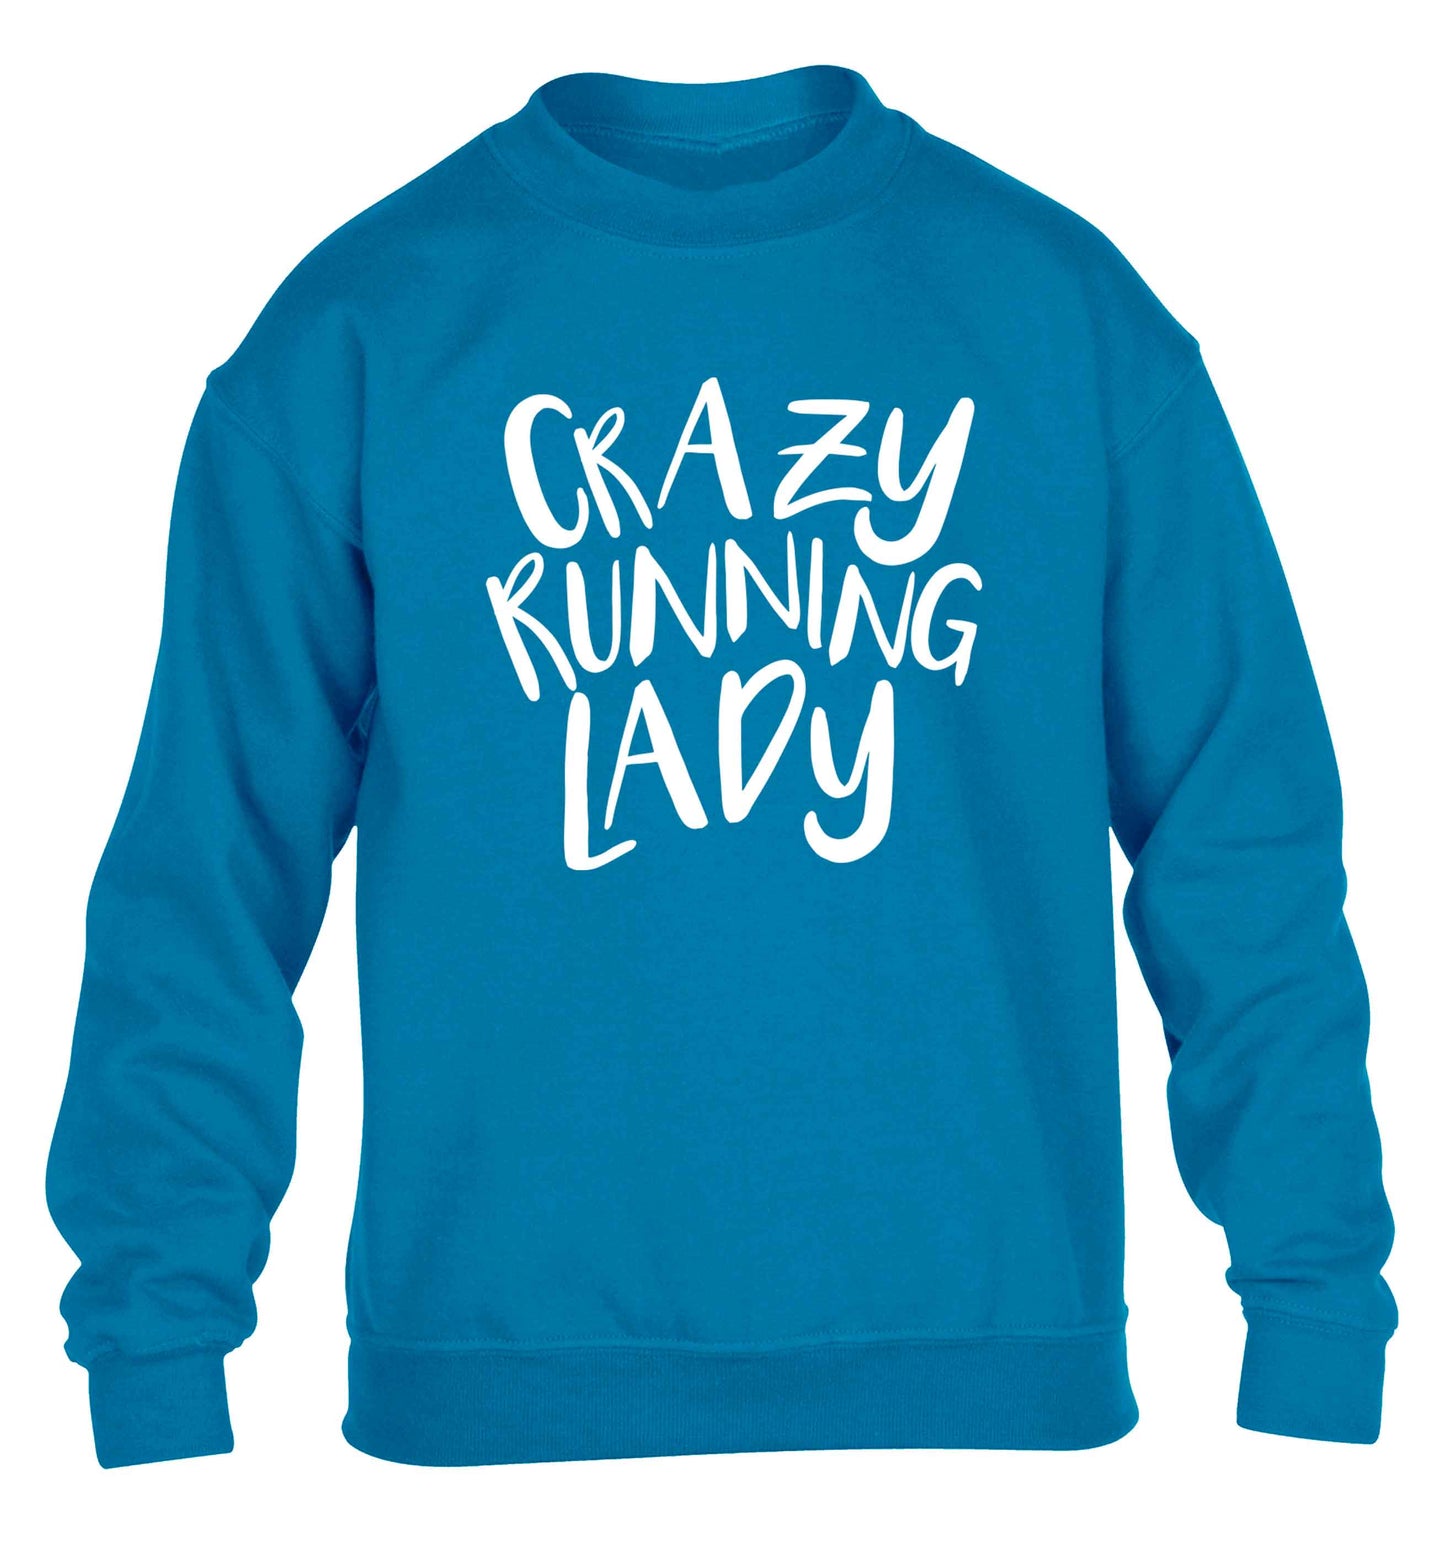 Crazy running lady children's blue sweater 12-13 Years